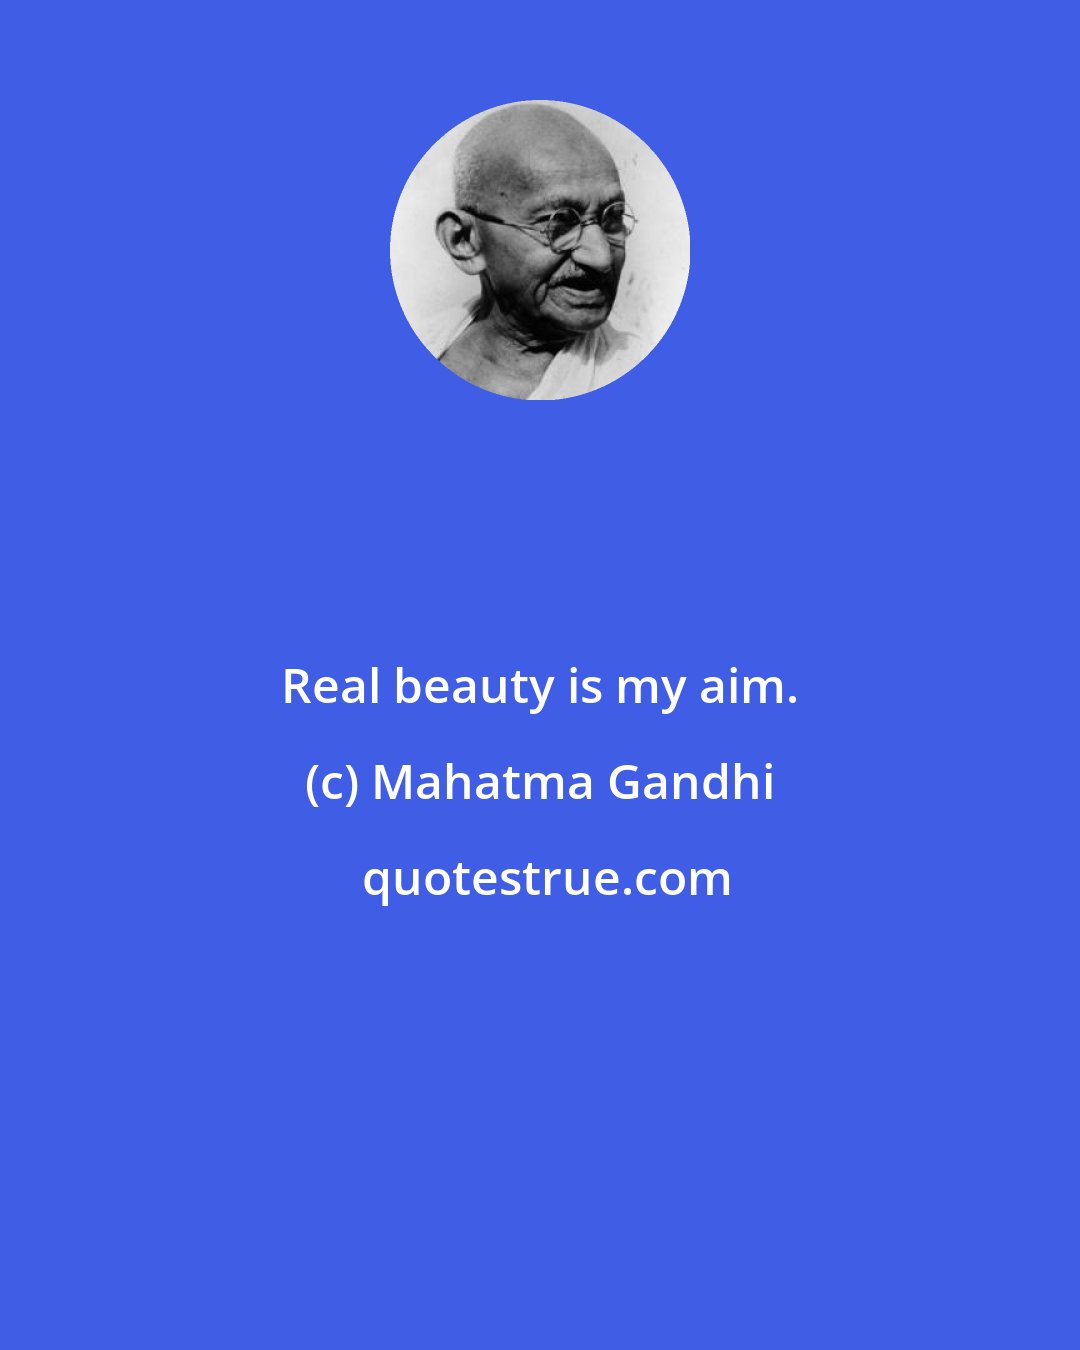 Mahatma Gandhi: Real beauty is my aim.